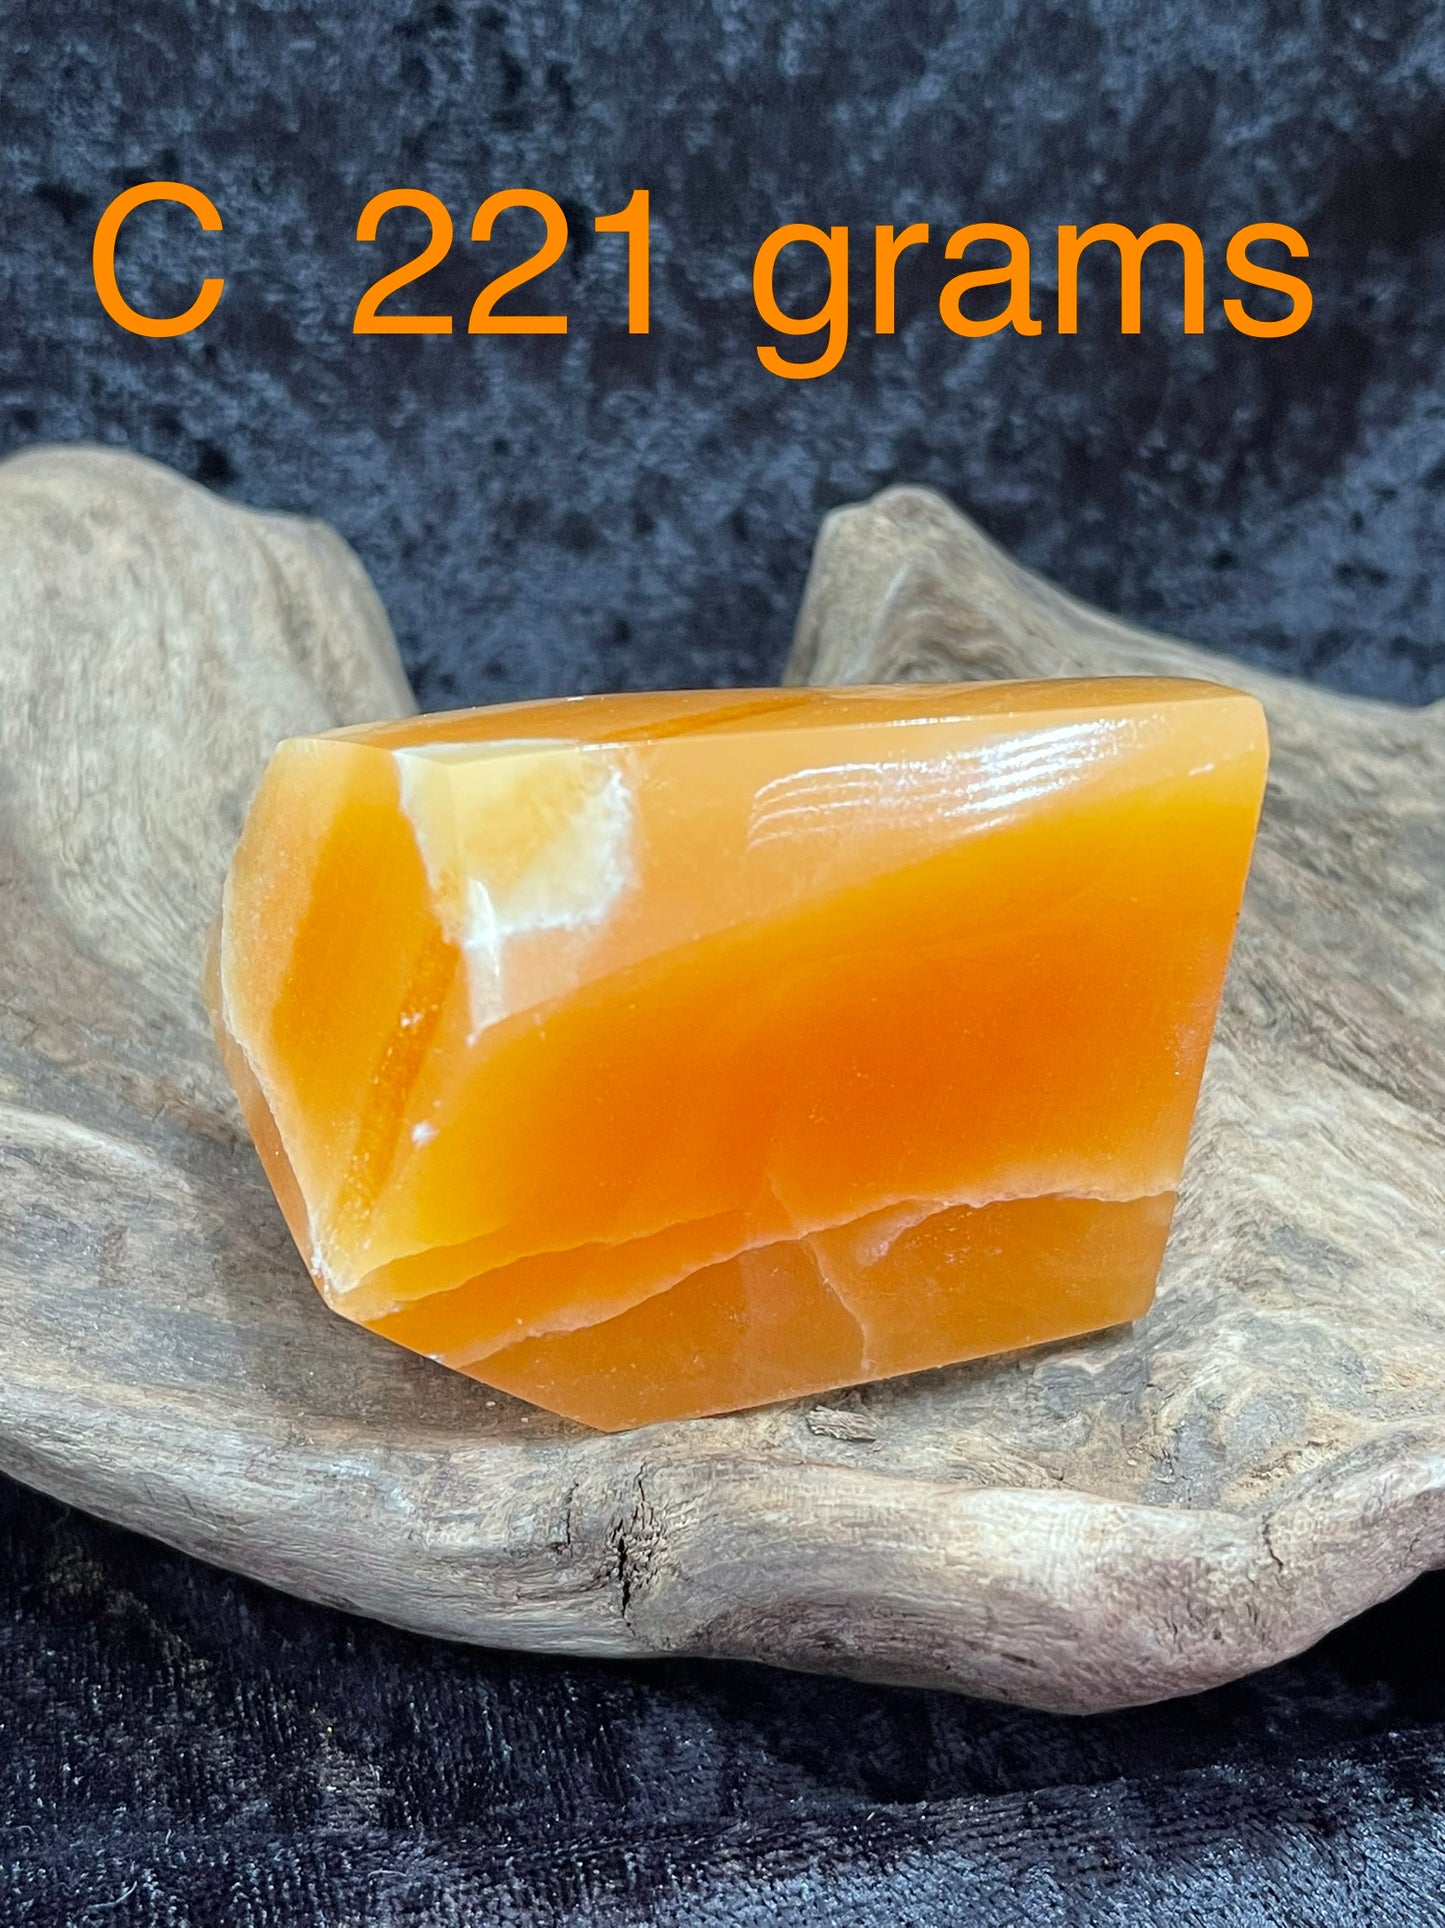 Orange calcite polished forms